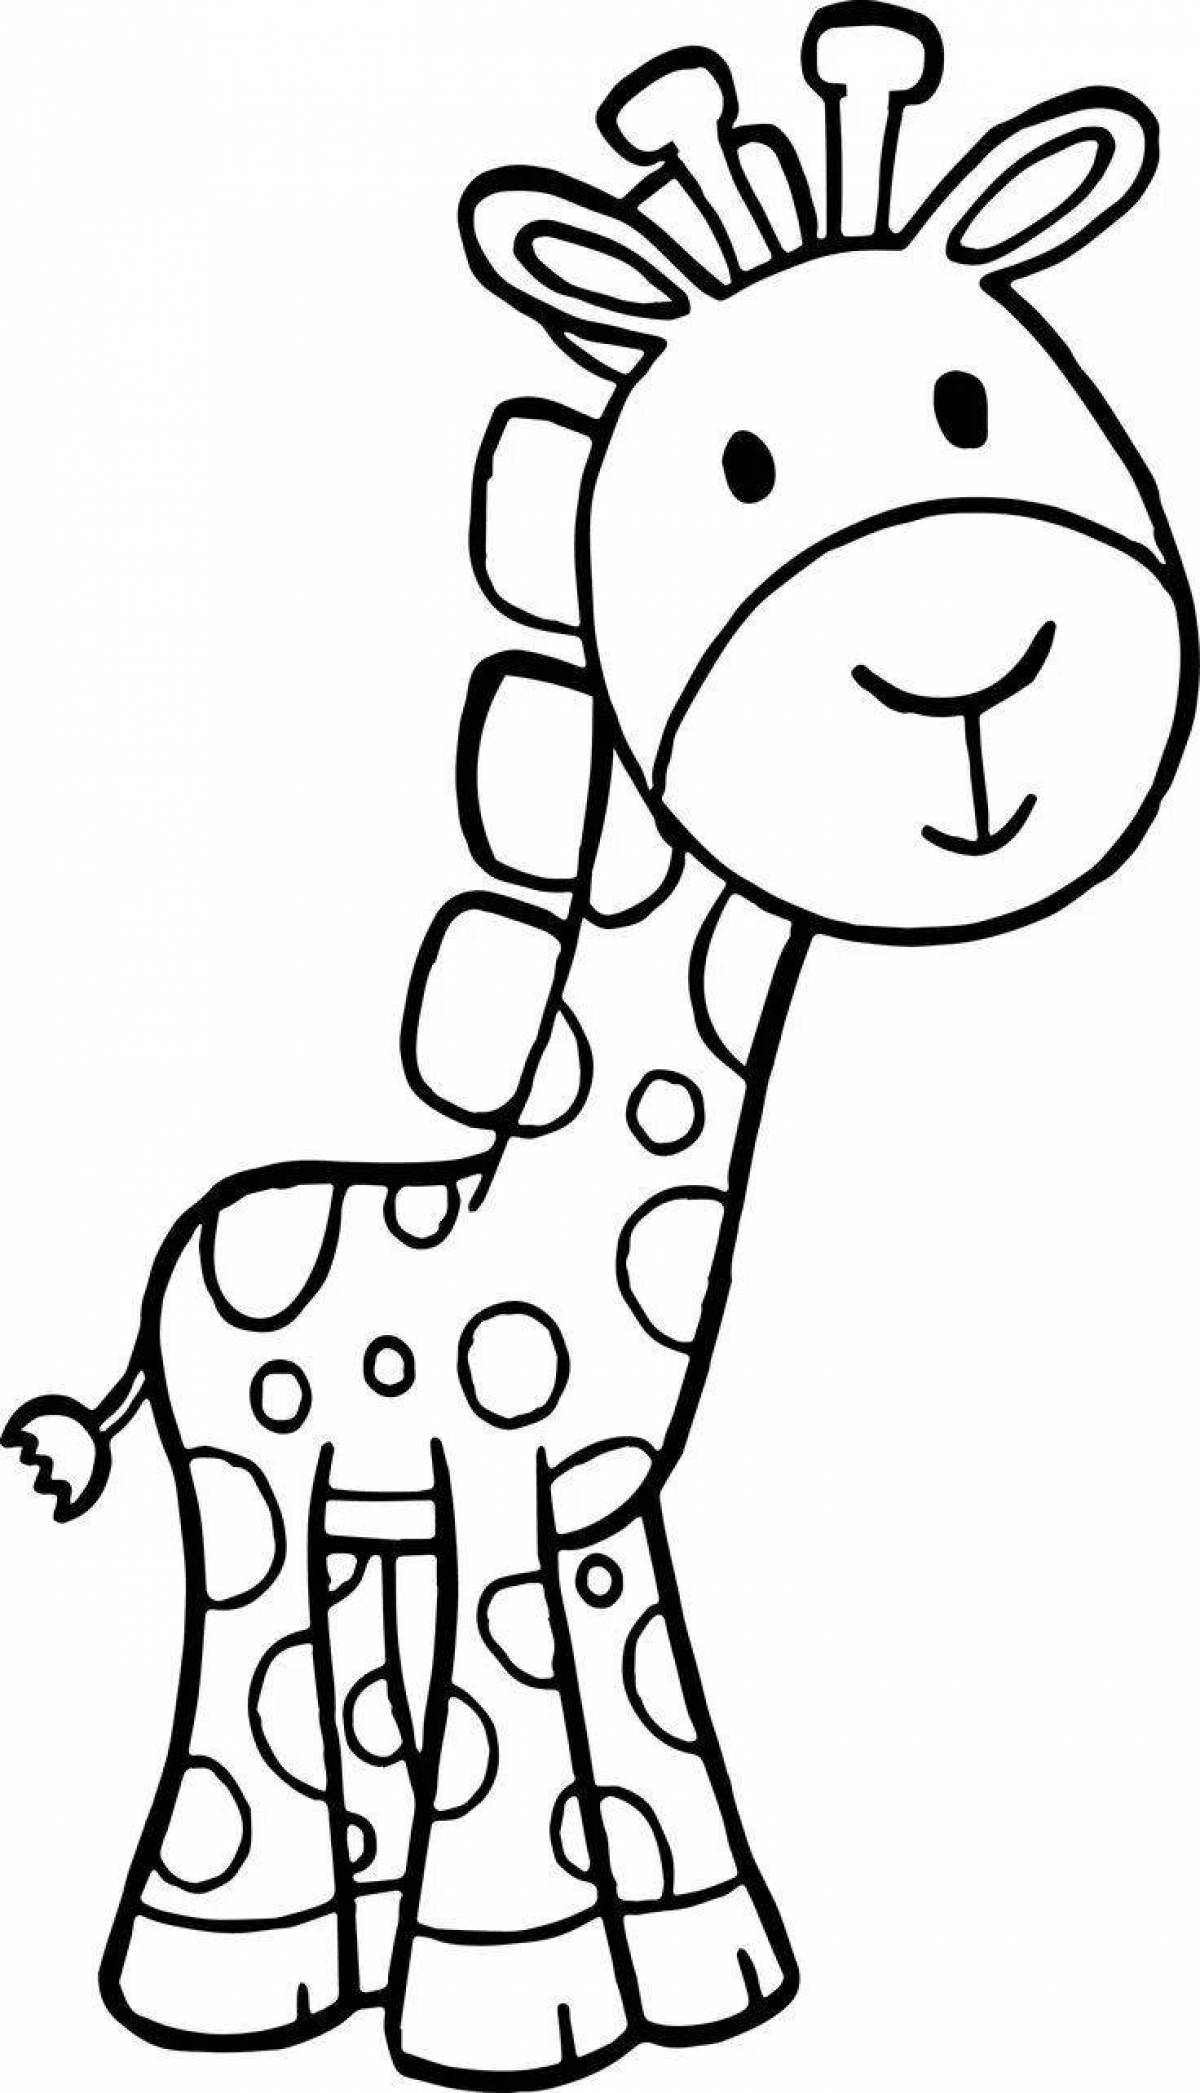 Забавный рисунок жирафа